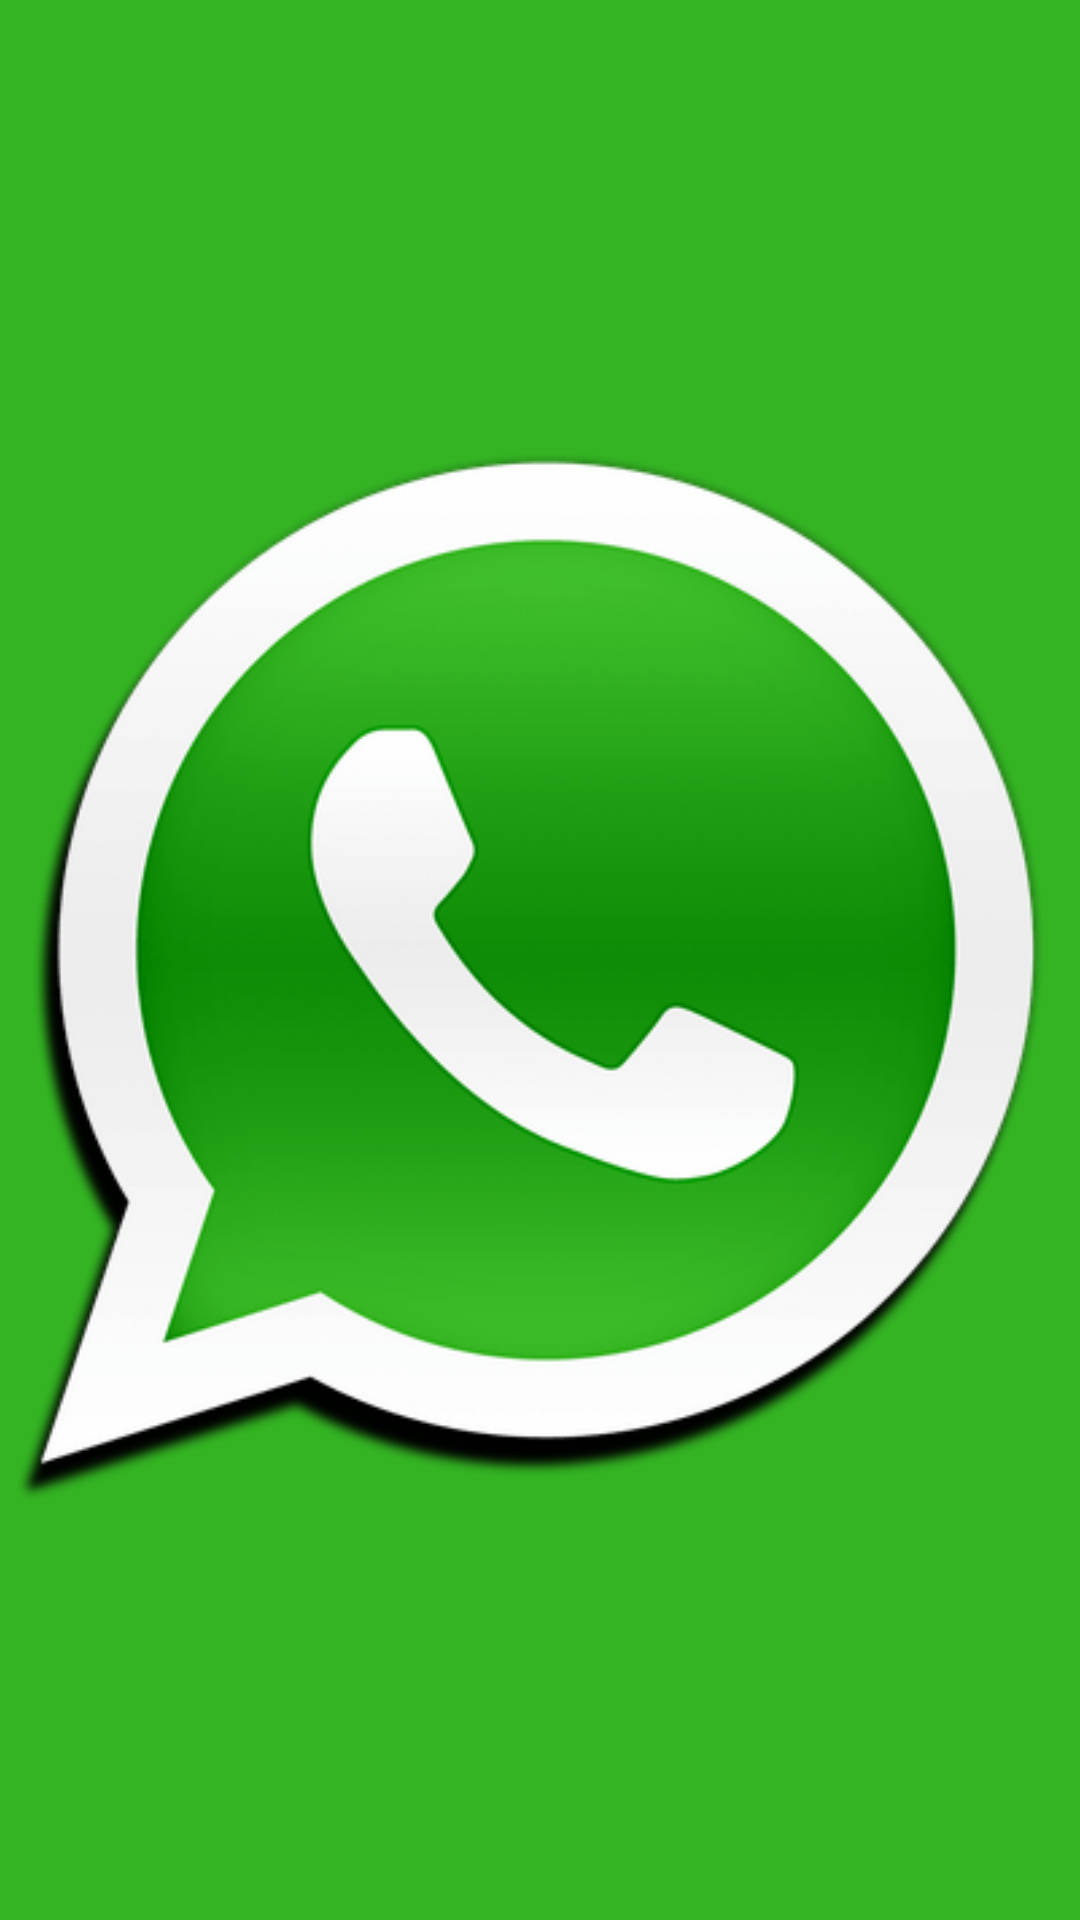 The World's Most Popular Messaging Platform – Whatsapp